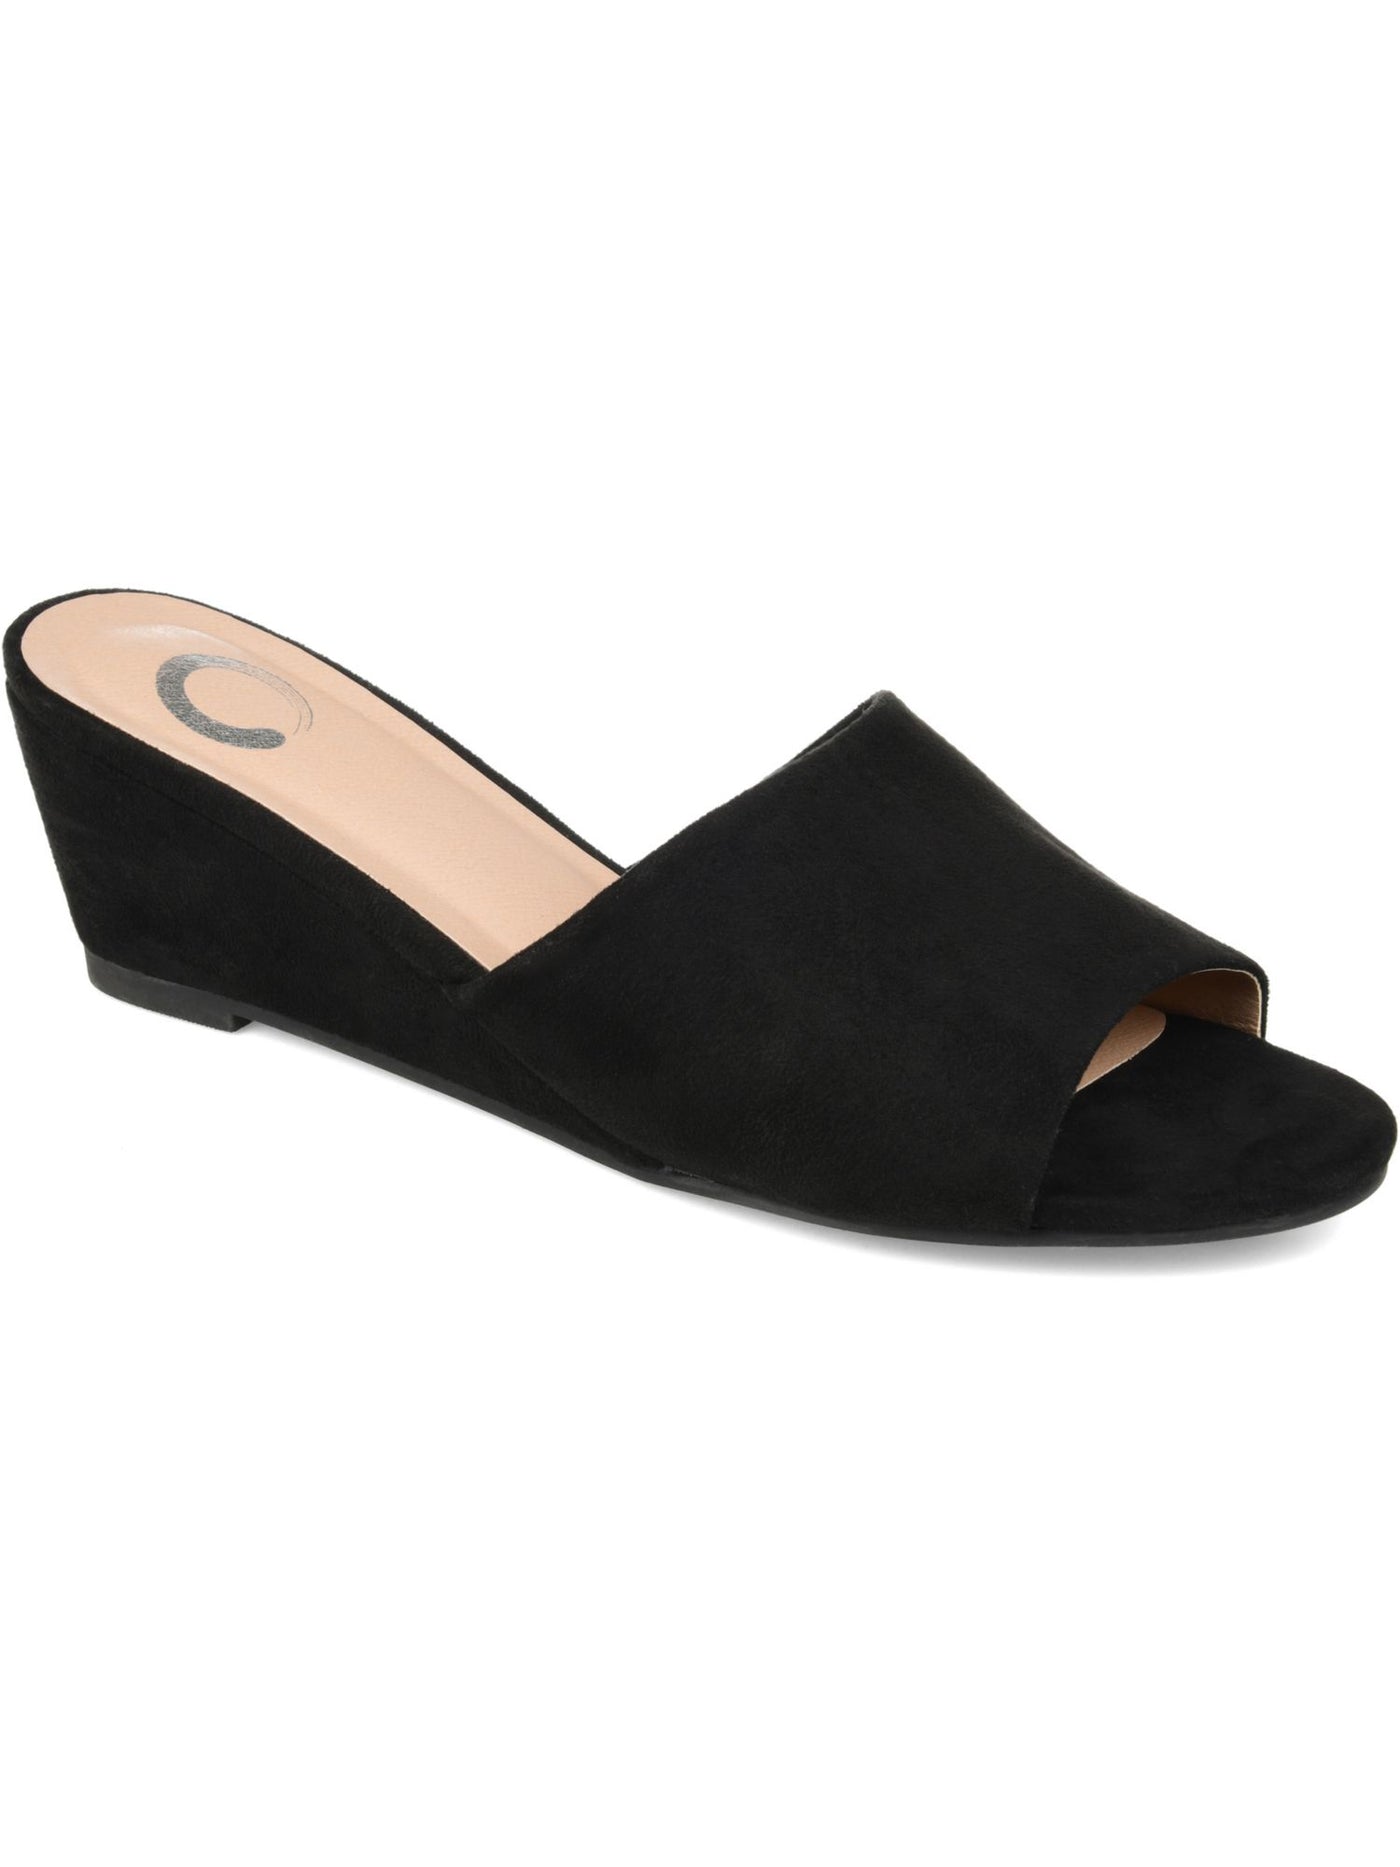 JOURNEE COLLECTION Womens Black Padded Pavan Open Toe Wedge Slip On Slide Sandals Shoes 10 M